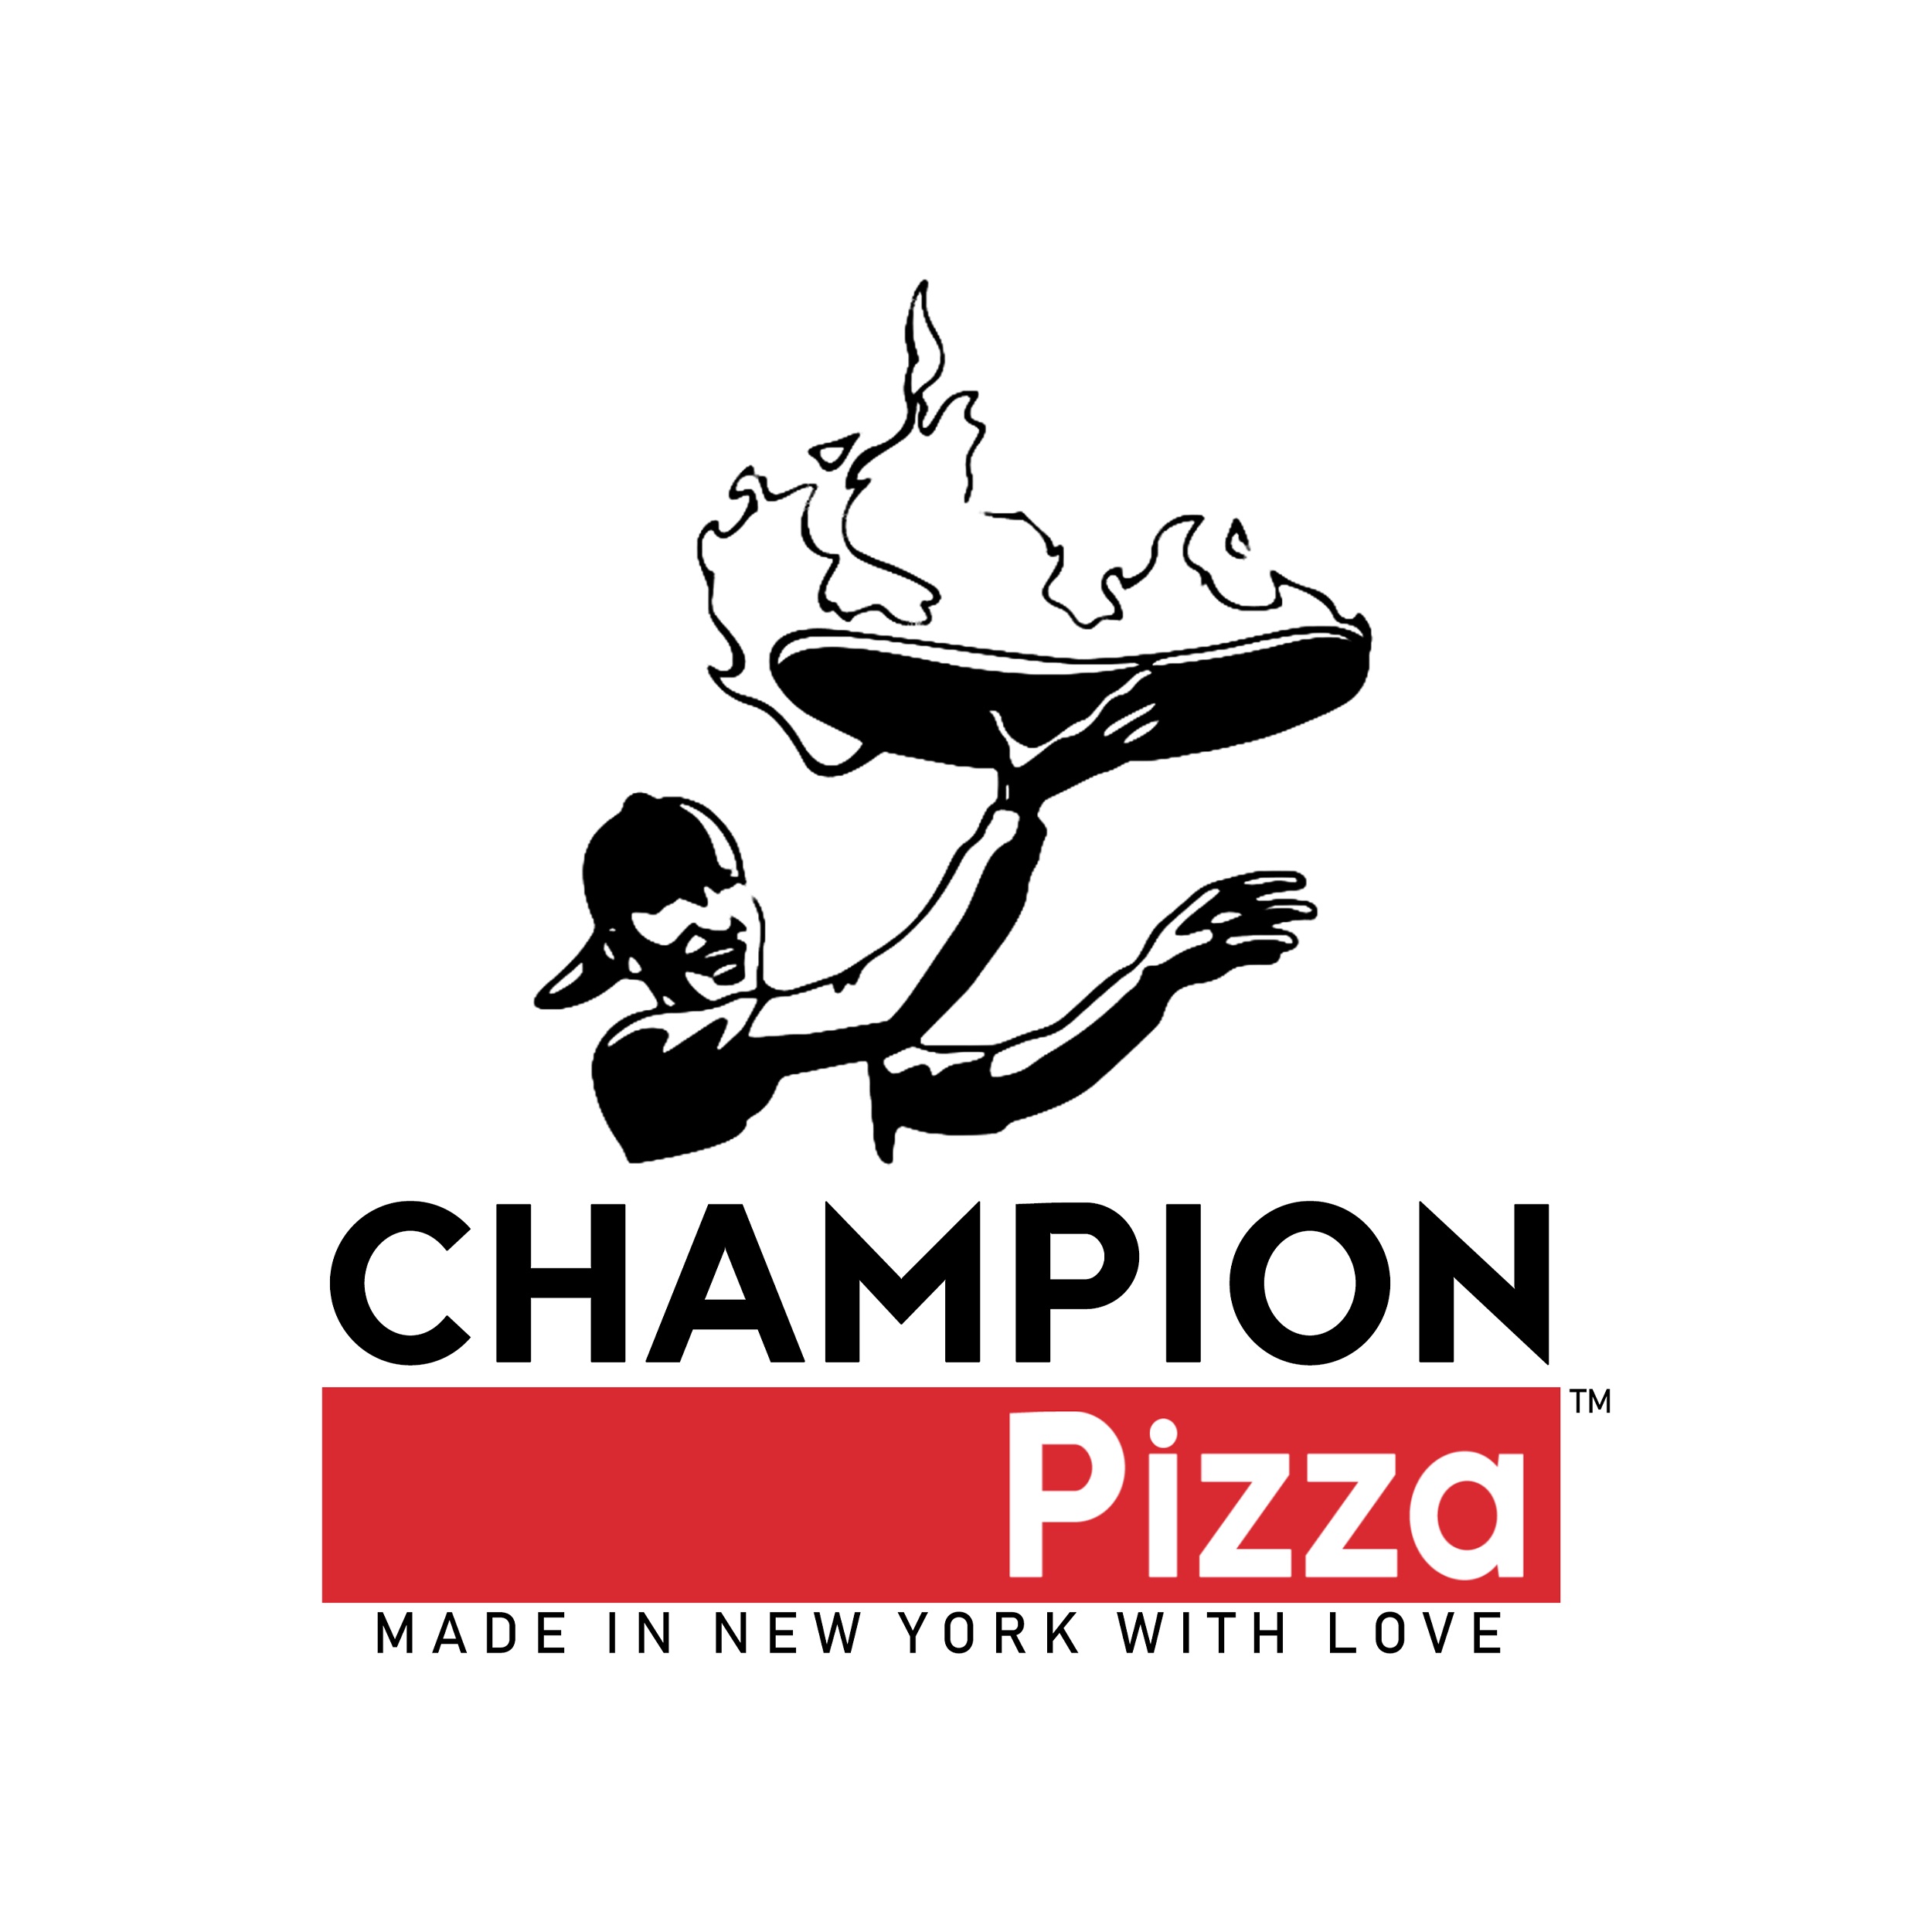 (Black - White Background) ICON - Champion Pizza Logo